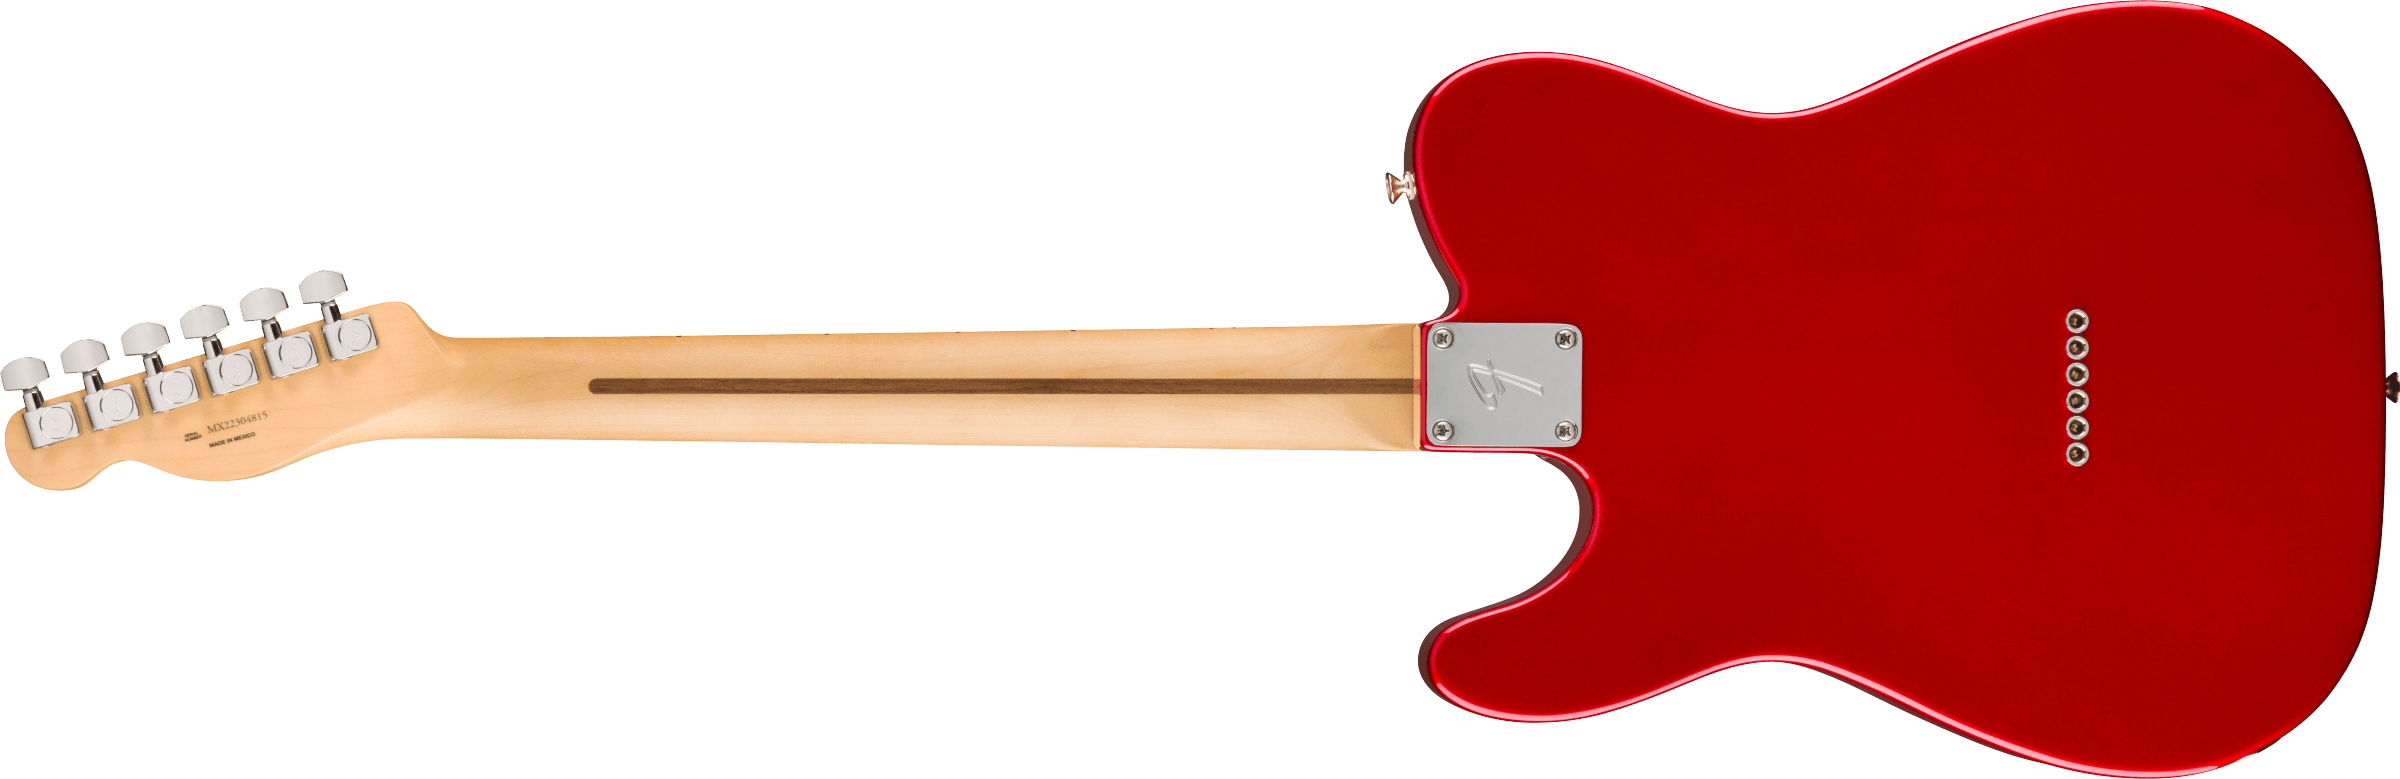 Fender Player Telecaster Candy Apple Red MN - Regent Sounds